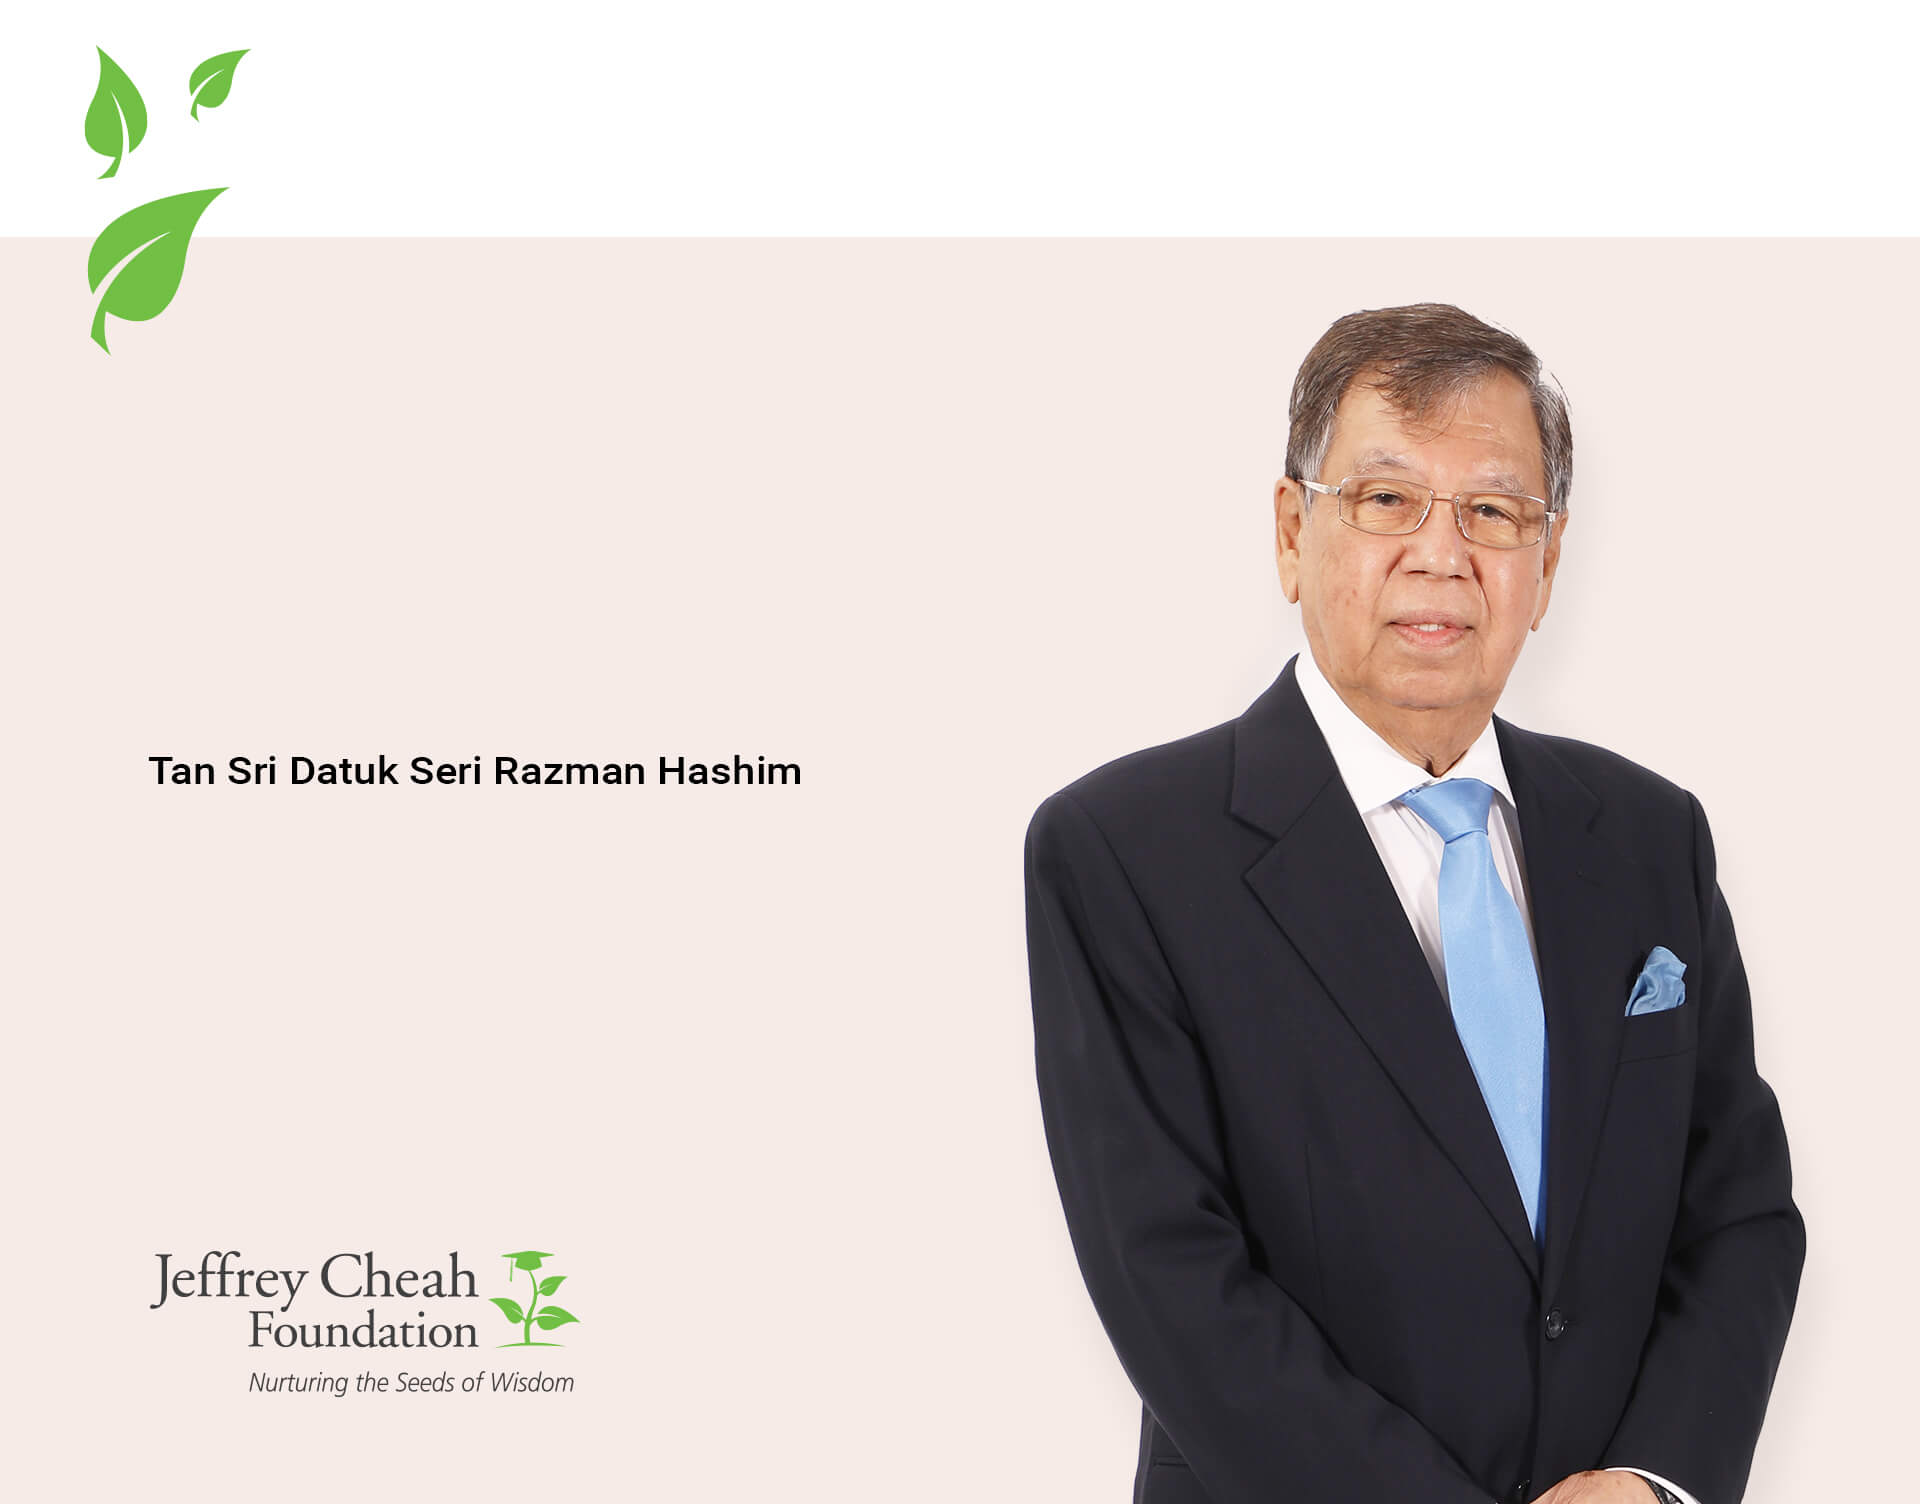 Tan Sri Datuk Seri Razman Hashim of Jeffery Cheah Foundation.